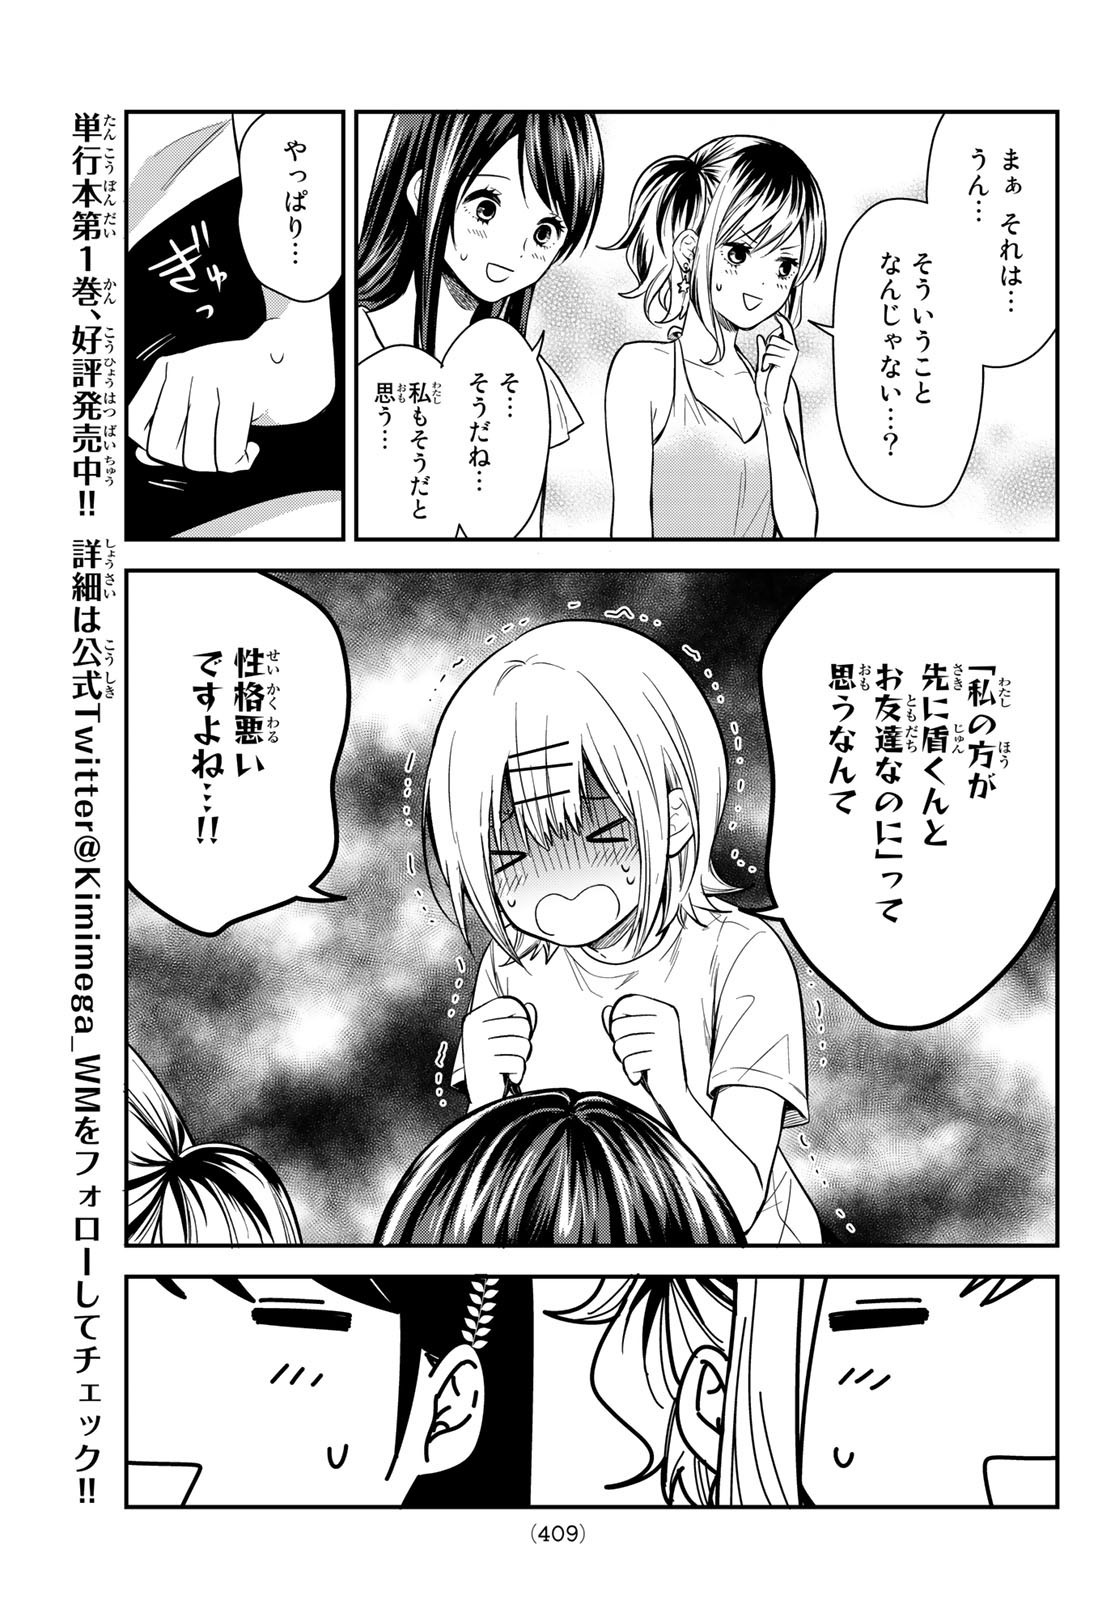 Kimi ga Megami Nara Ii no ni (I Wish You Were My Muse) - Chapter 020 - Page 19